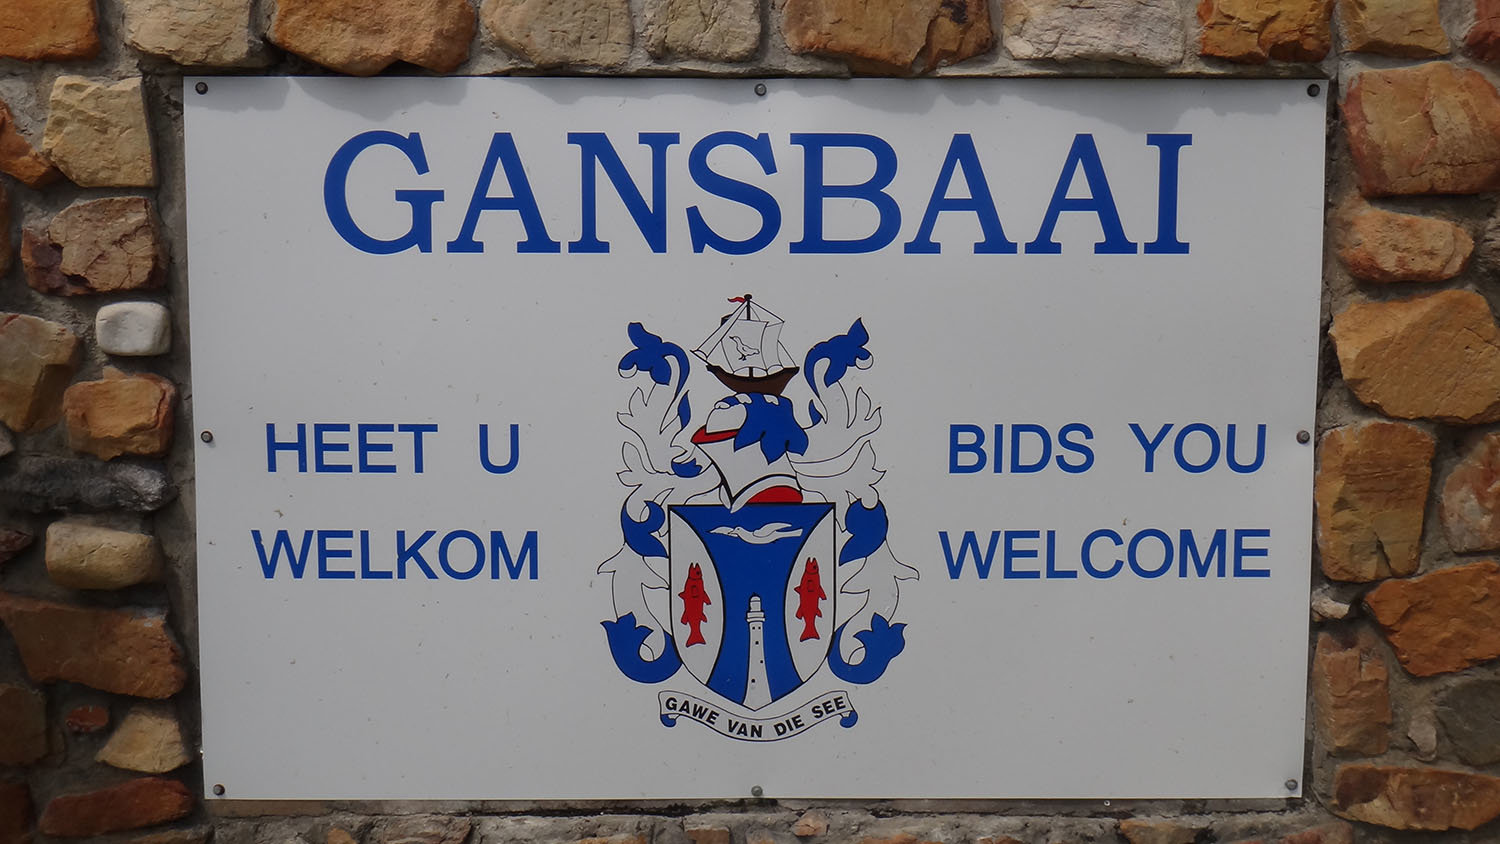 Welcome to Gansbaai, entrance sign at Gansbaai town